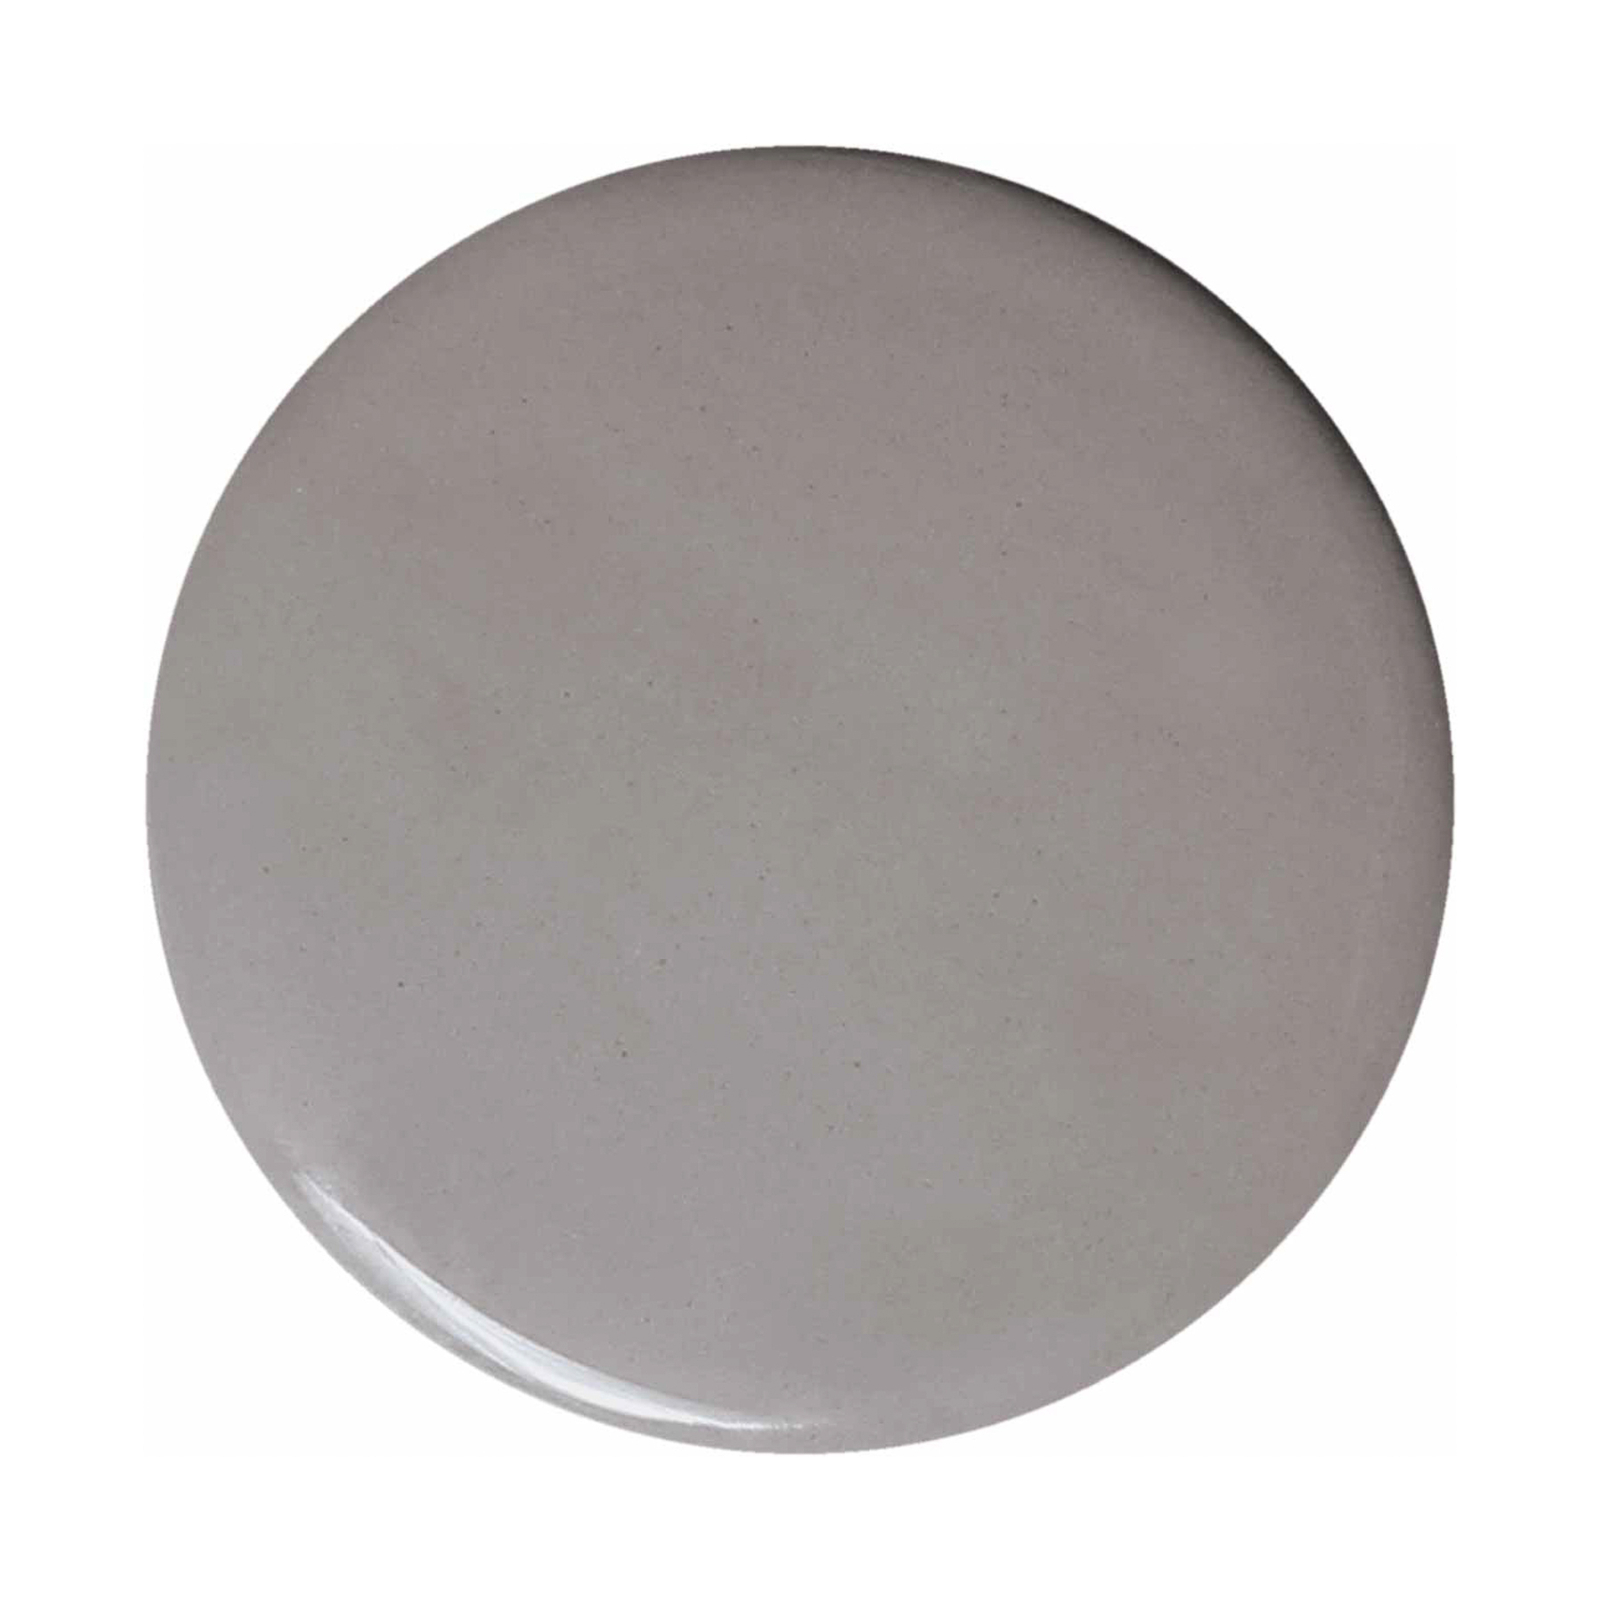 Závěsné světlo Ayrton, keramika, délka 29 cm, šedá